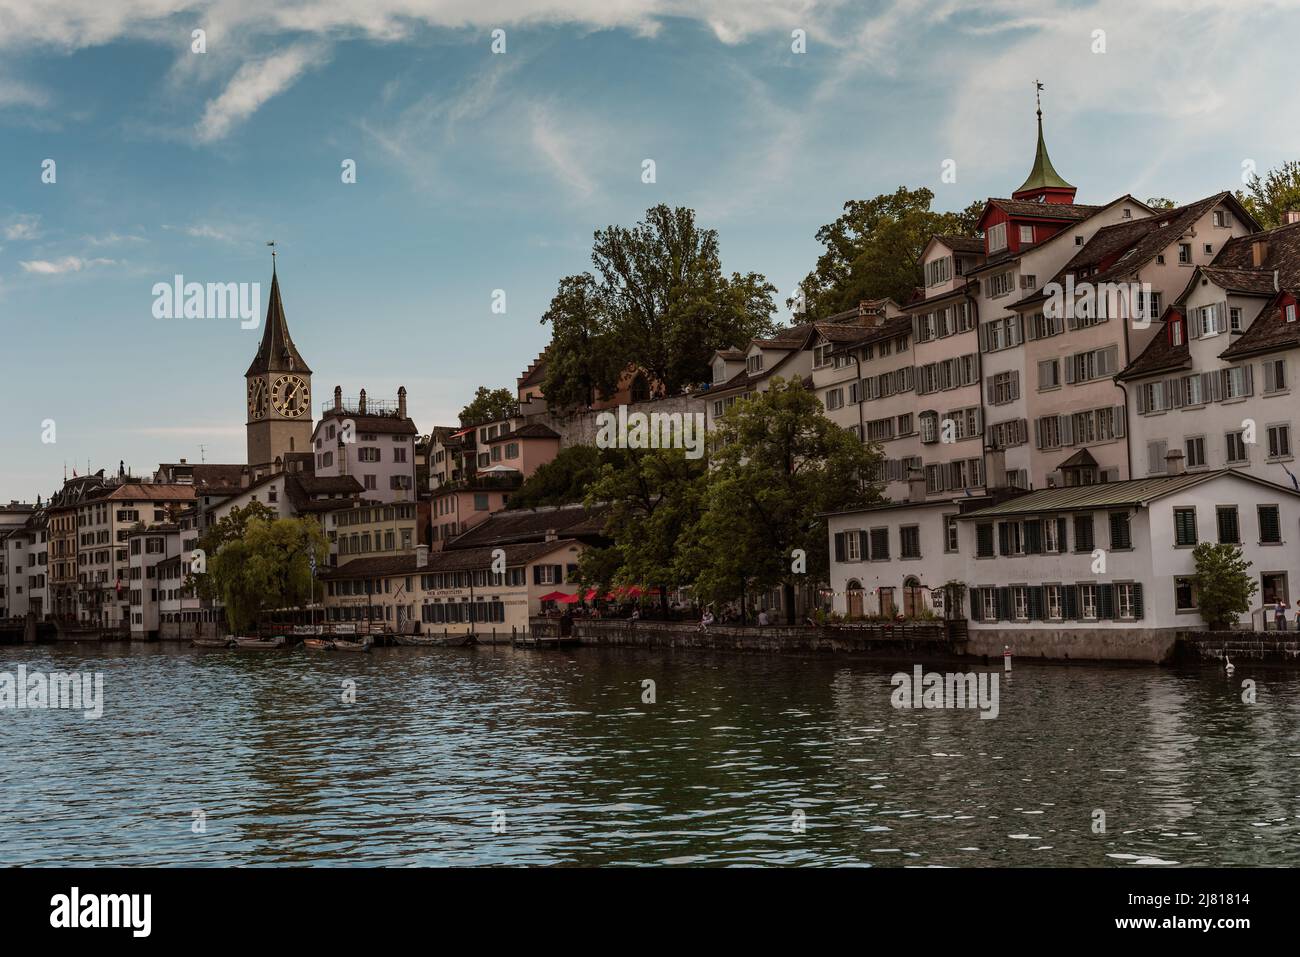 Zurich Switzerland. 7. July 2018 St. Peter's church clock tower in Zurich viewed from the river Limmat Stock Photo